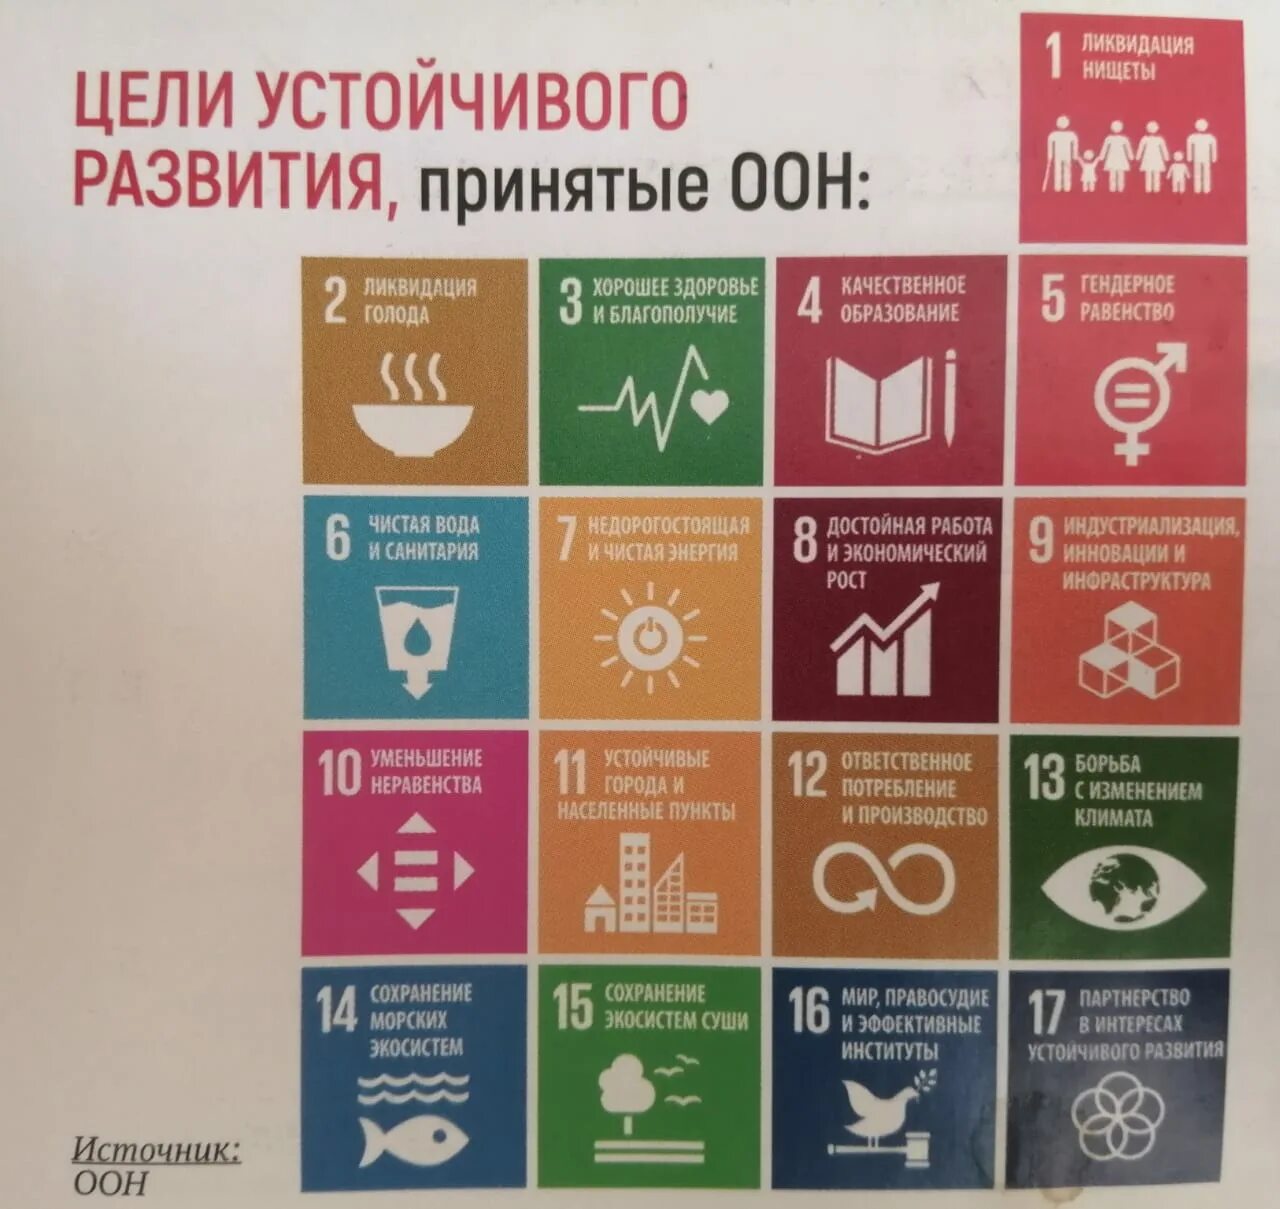 Цели устойчивого развития. Цели устойчивого развития ООН. 17 Целей устойчивого развития ООН. Цели устойчивого развития ООН 2015-2030.